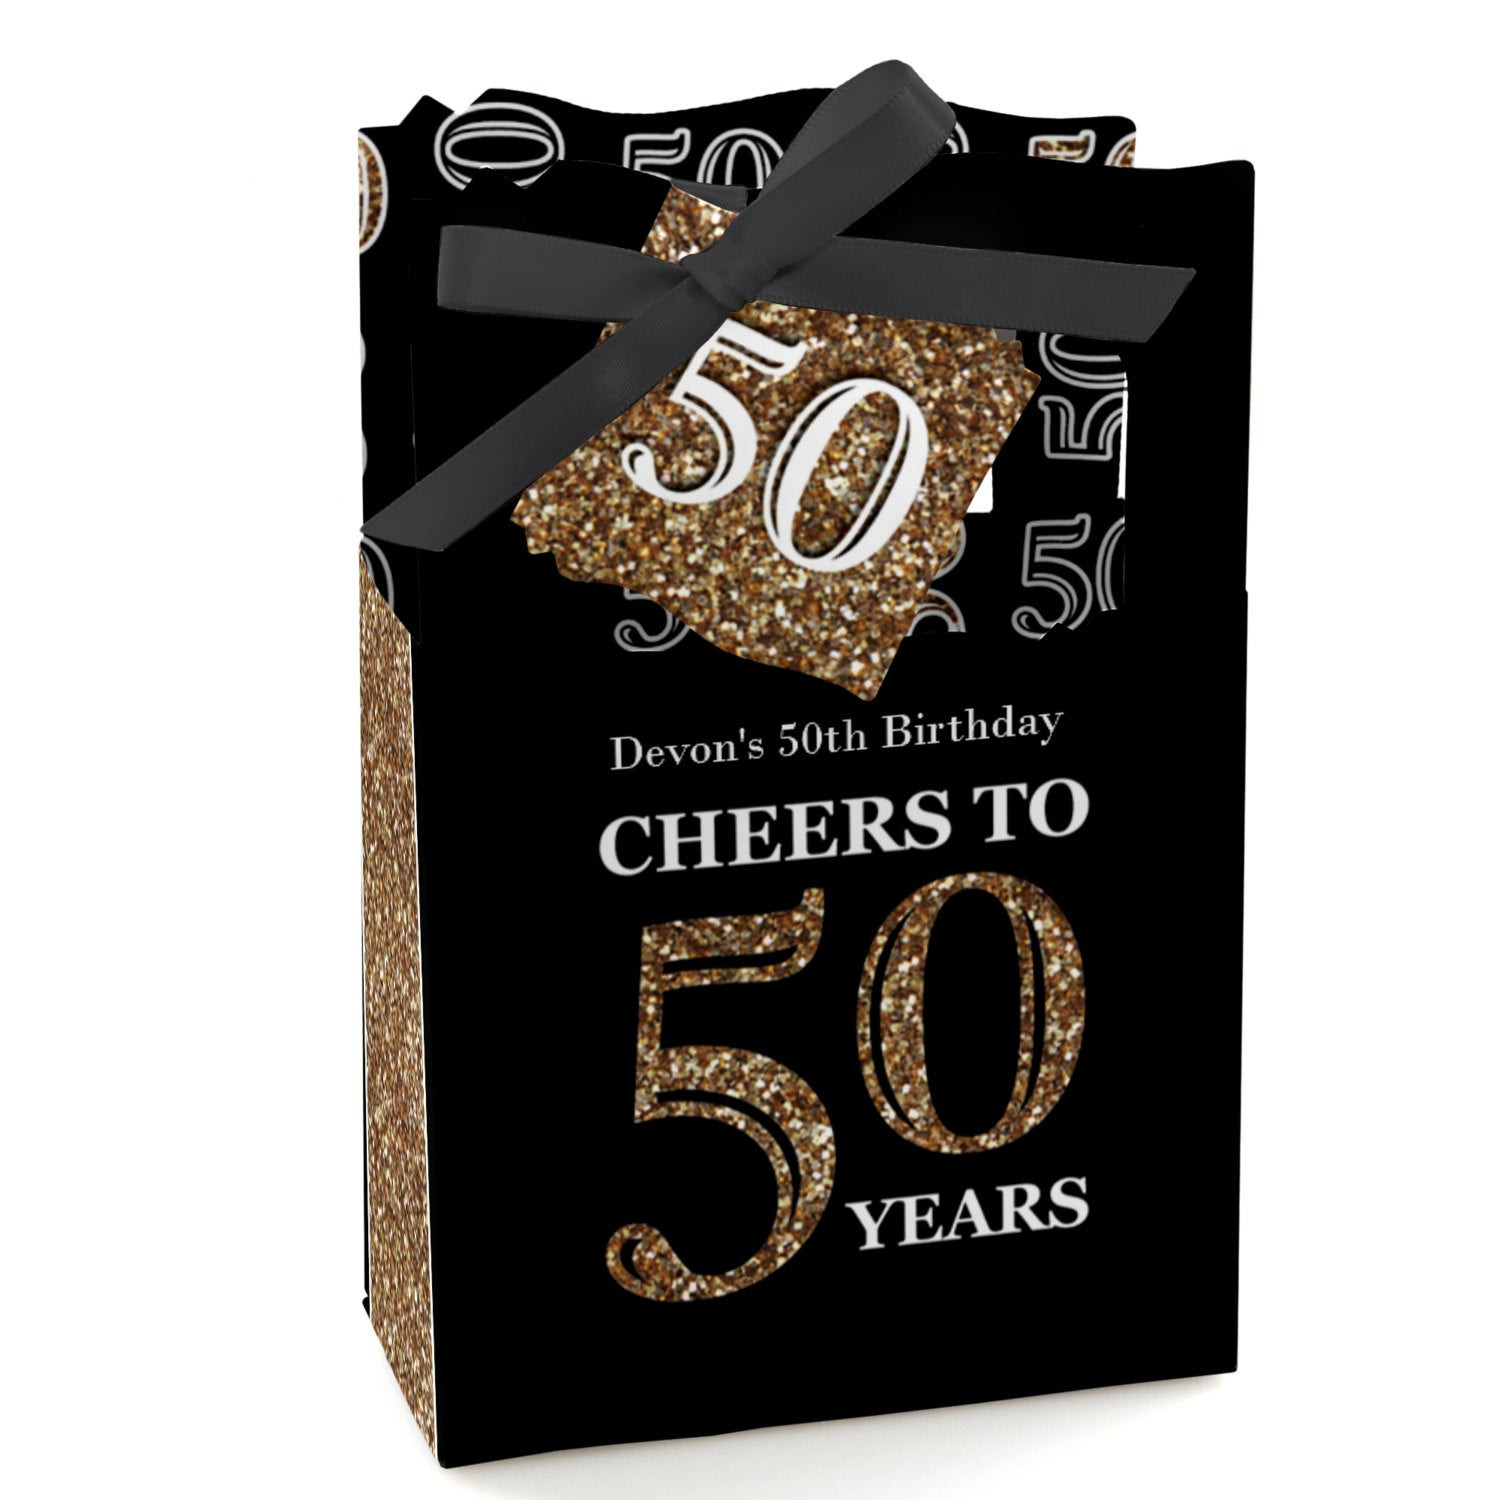 50th Birthday Party Favors Ideas
 50th Birthday Party Favors for Birthday Parties Favor Boxes